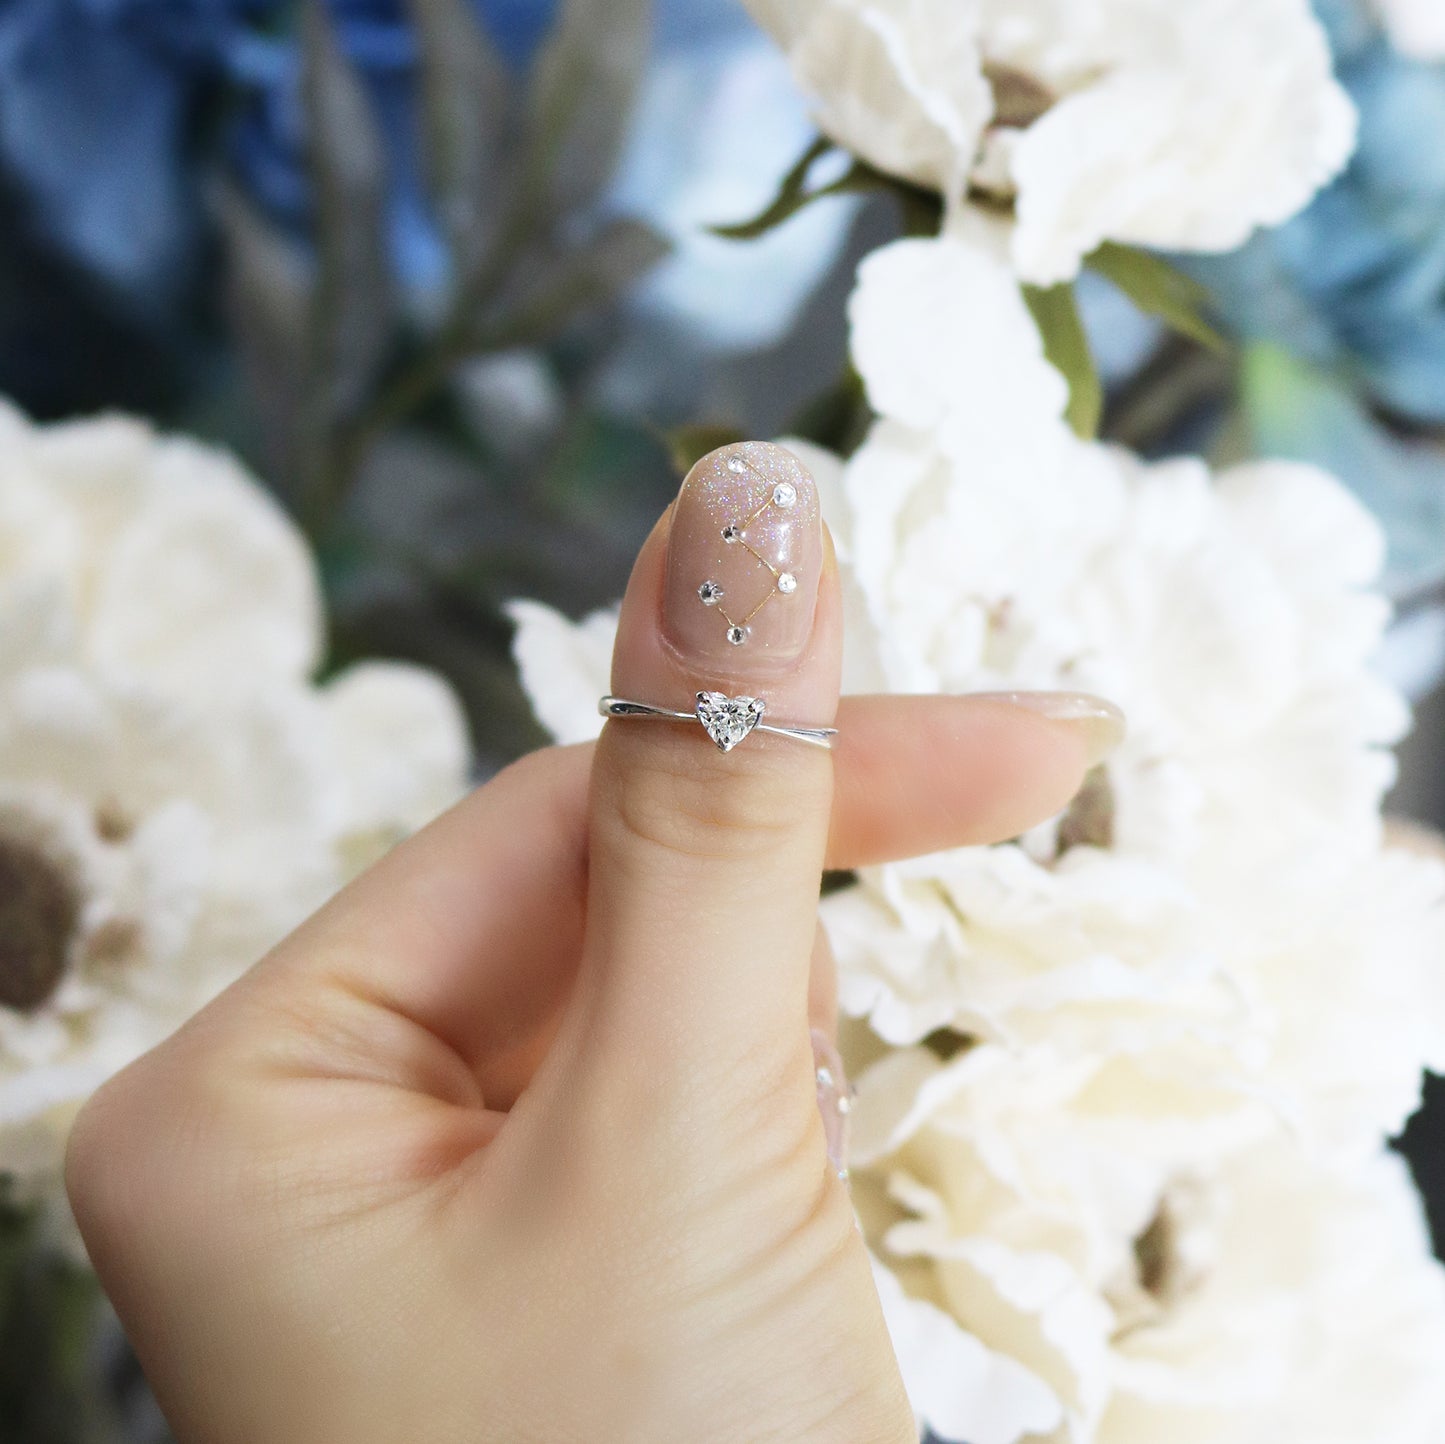 18k白金愛心鑽石戒指在拇指上 18k White Gold Heart Solitaire Diamond Ring on Thumb